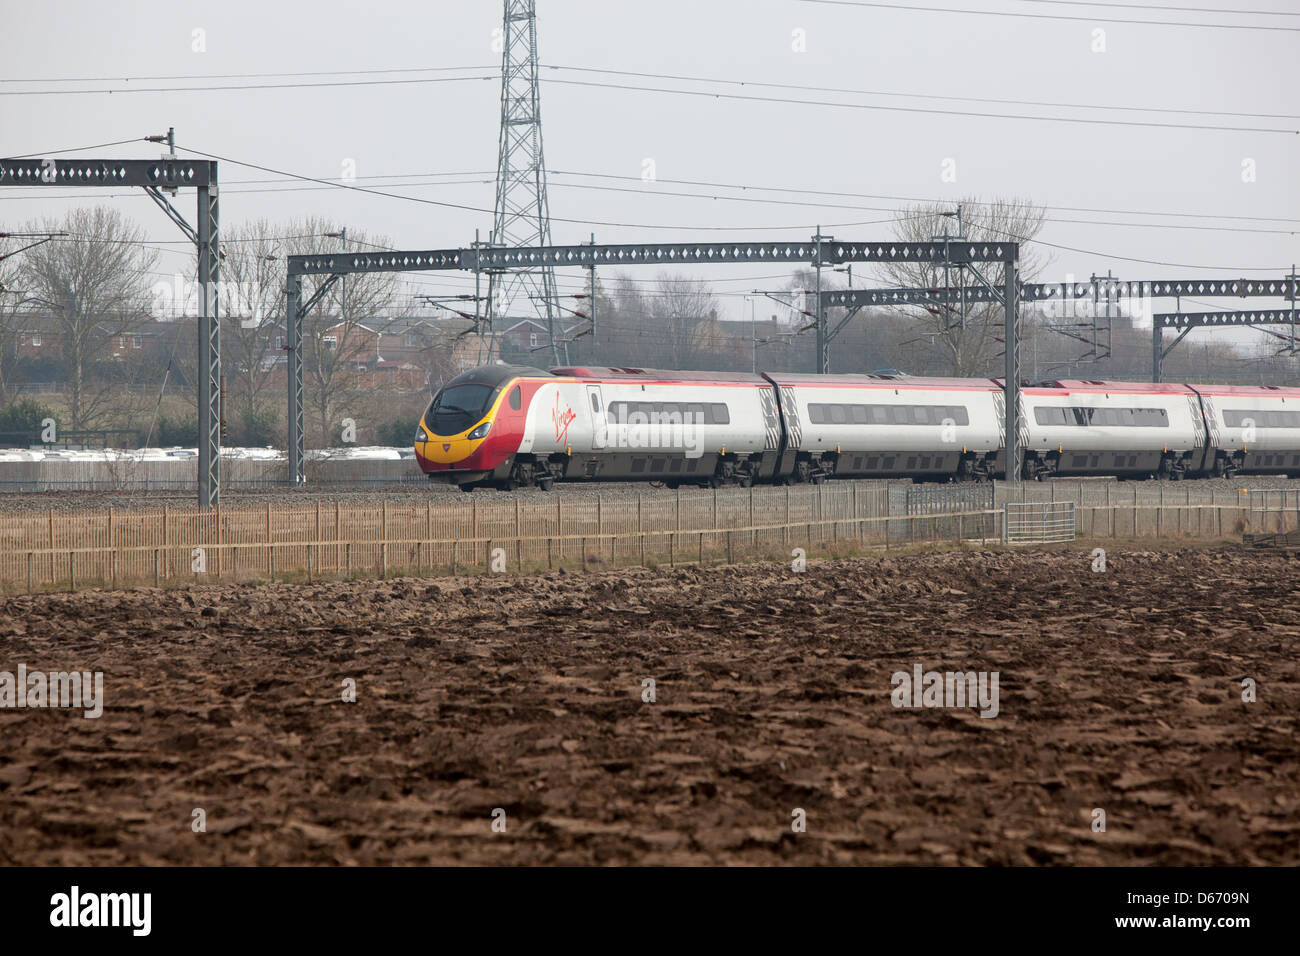 A Virgin train running through the countryside adjacent to farmland. Stock Photo